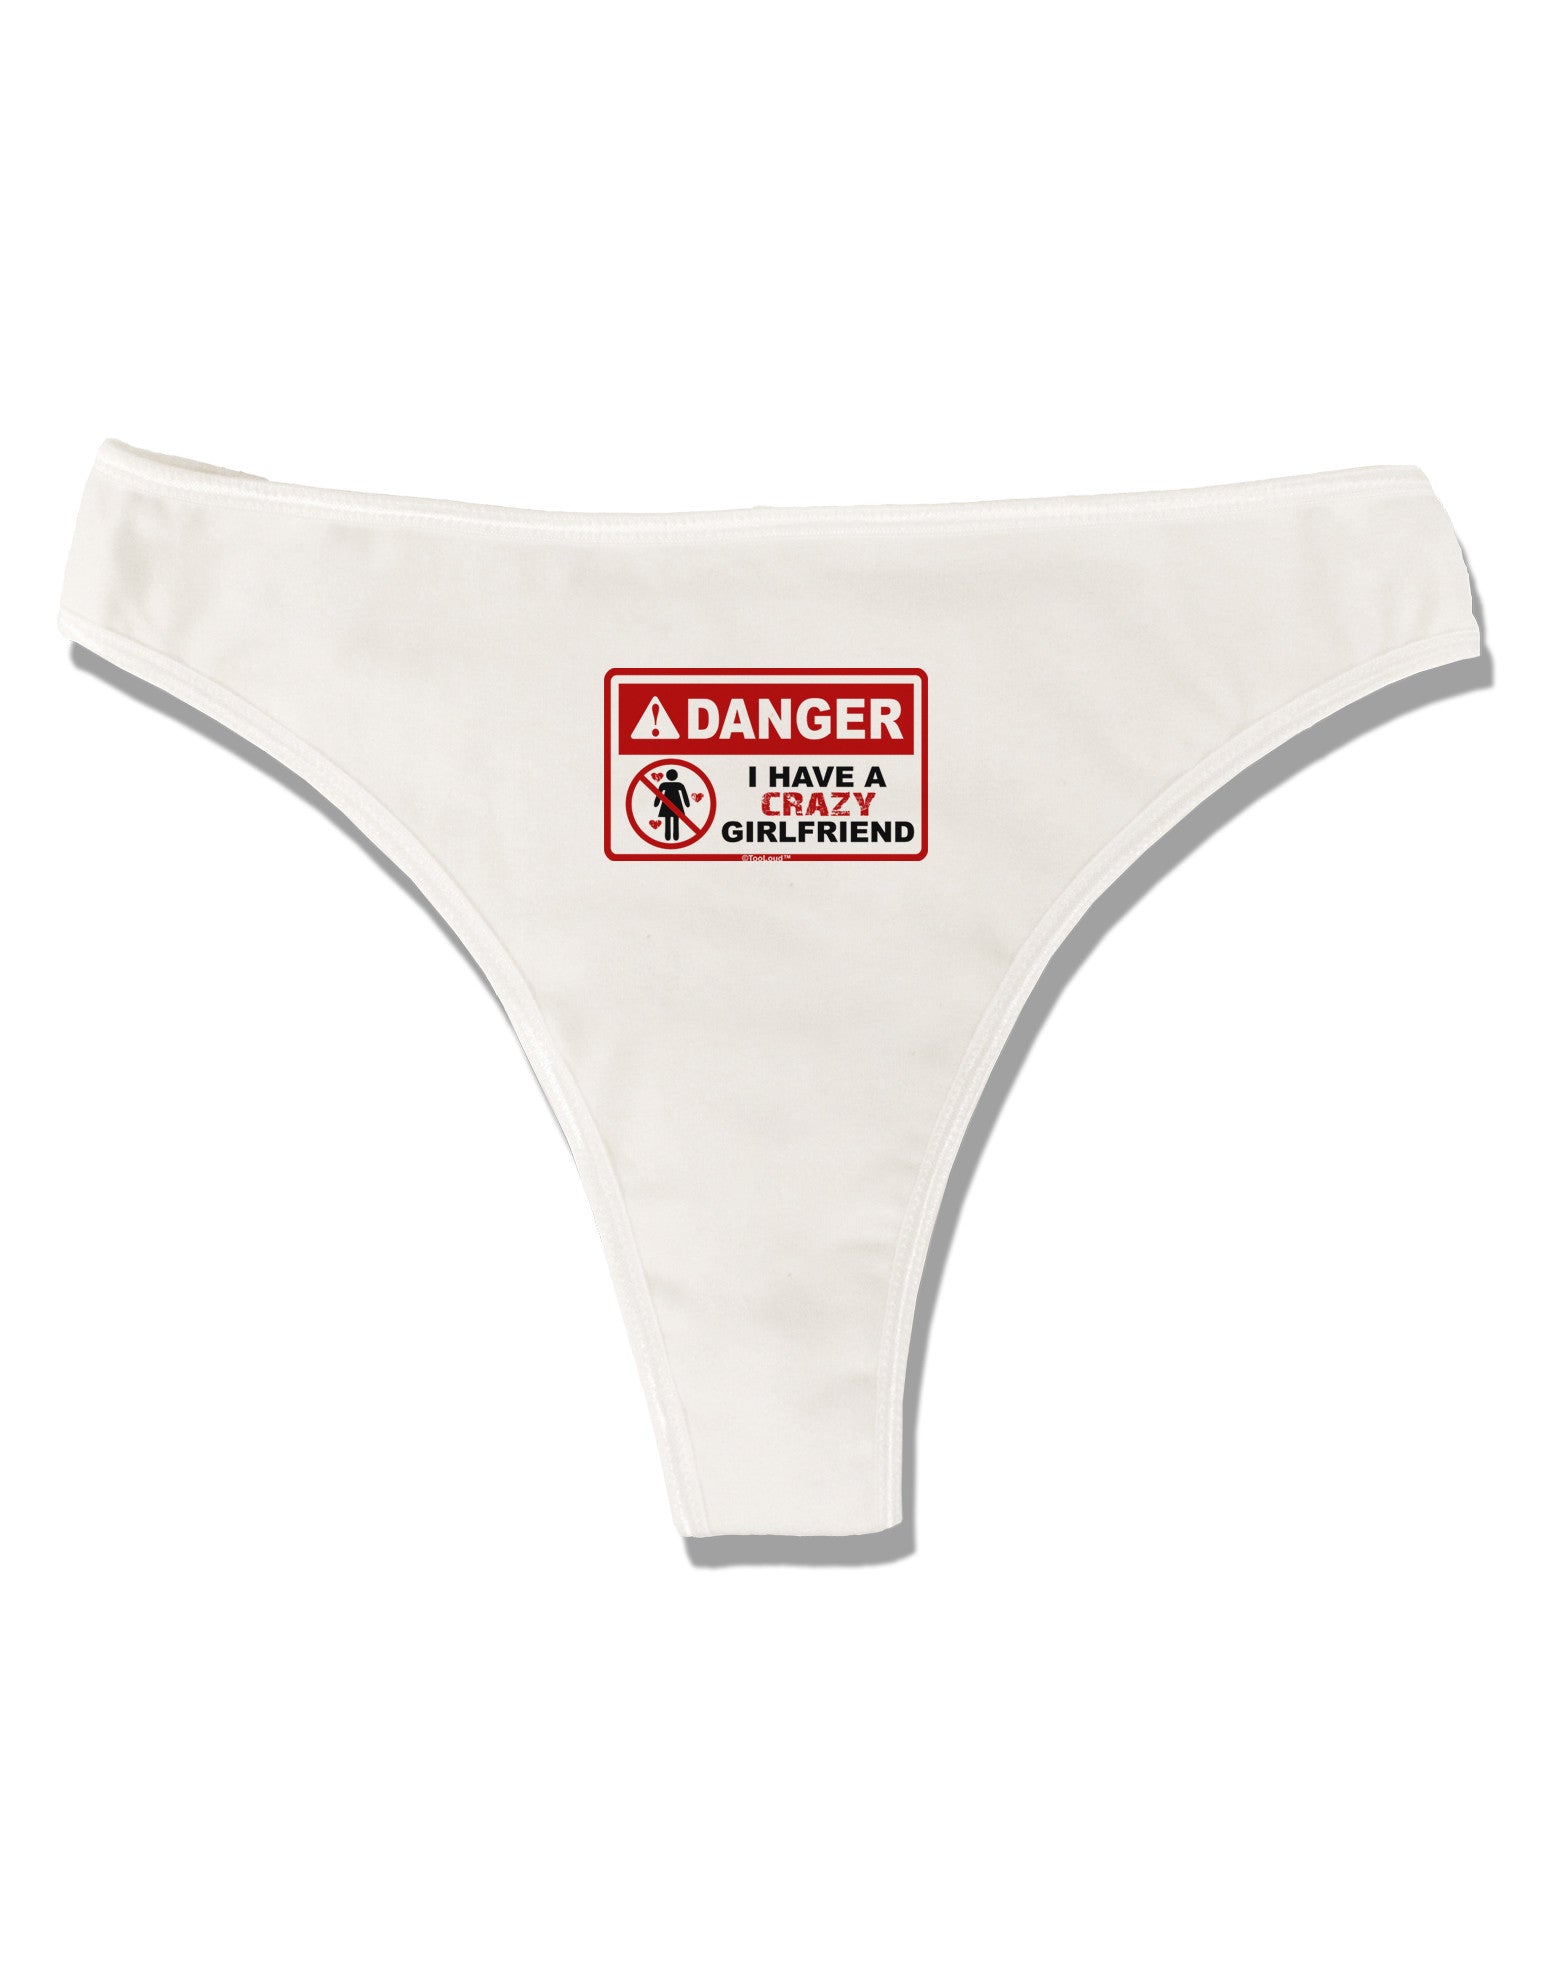 Danger - Crazy Girlfriend Womens Thong Underwear